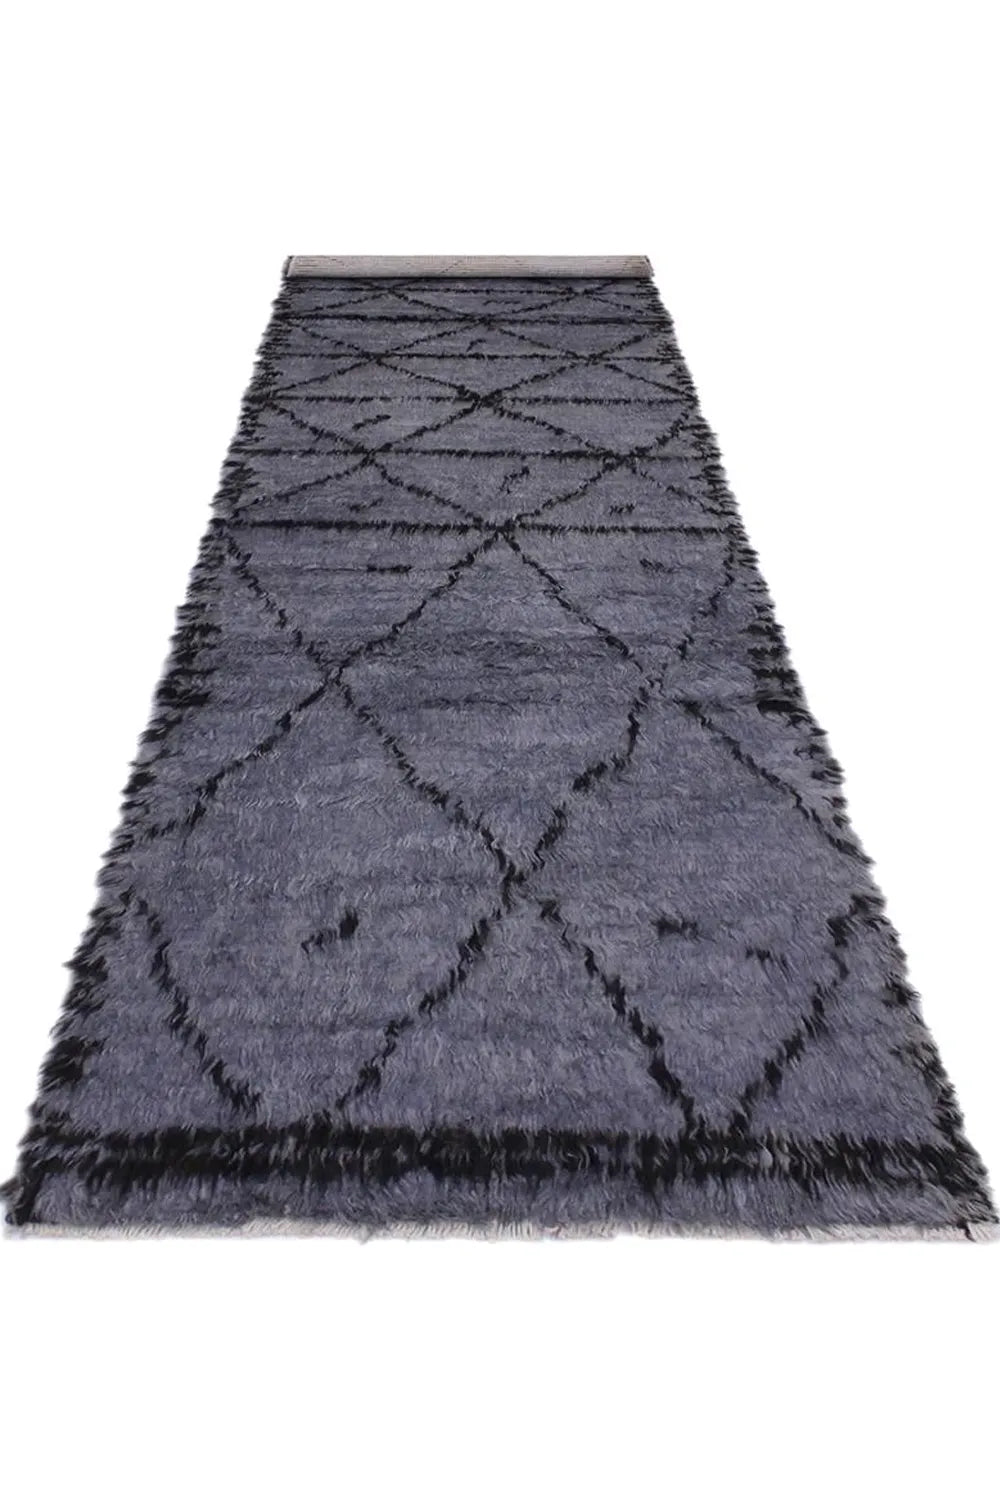 Luxurious dark gray floor runner, combining plush texture with elegant design.